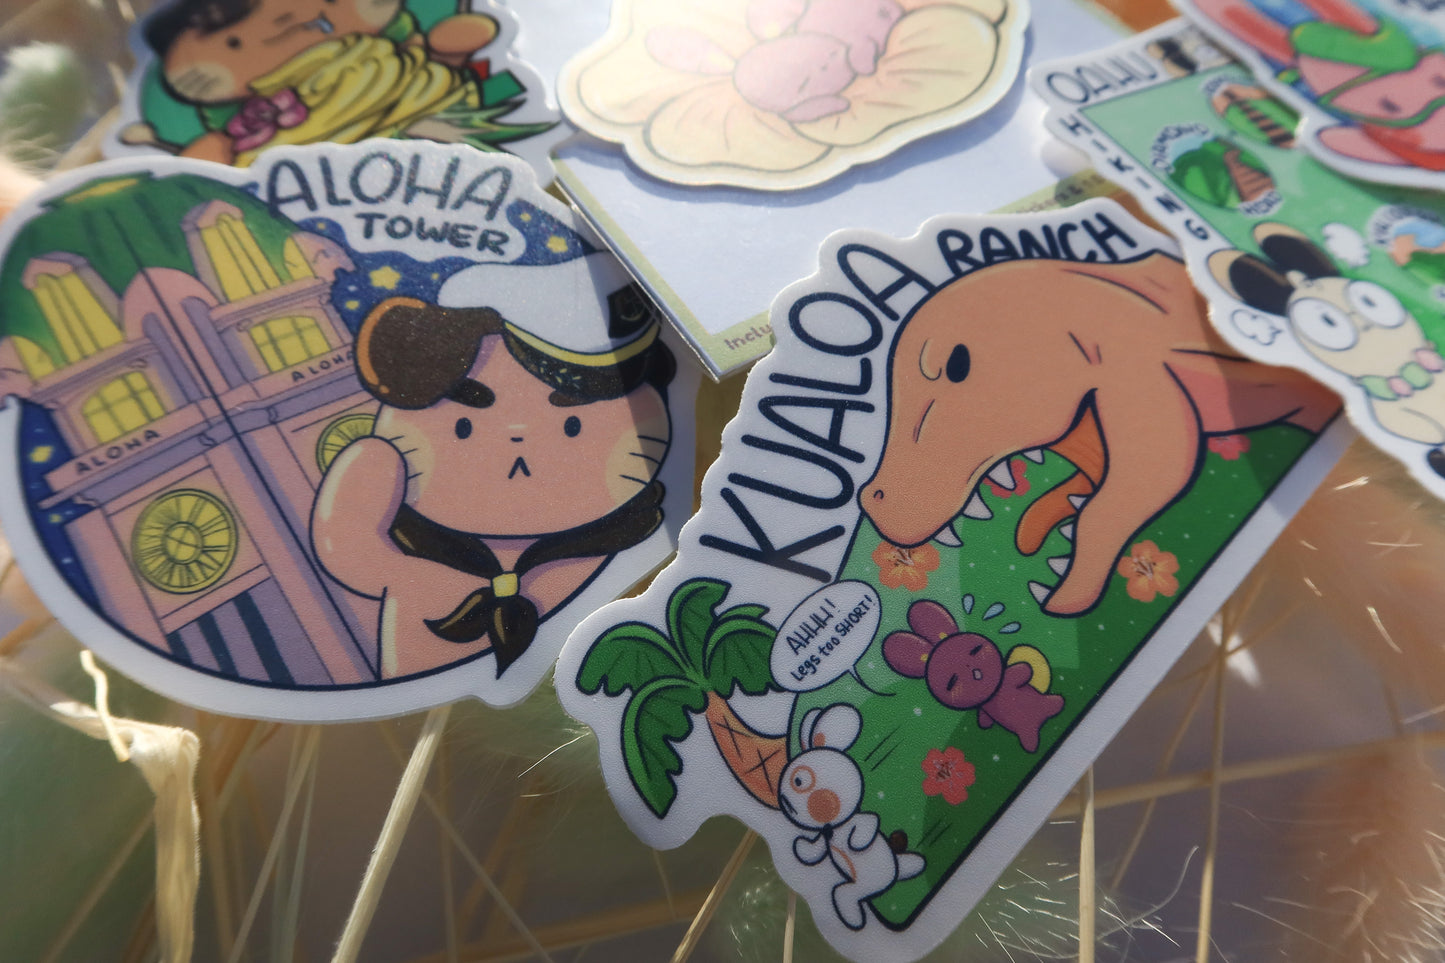 Hawaii Collection Fluffle Pack - OAHU (6 Vinyl + free Holo Bora Gogu Sticker)